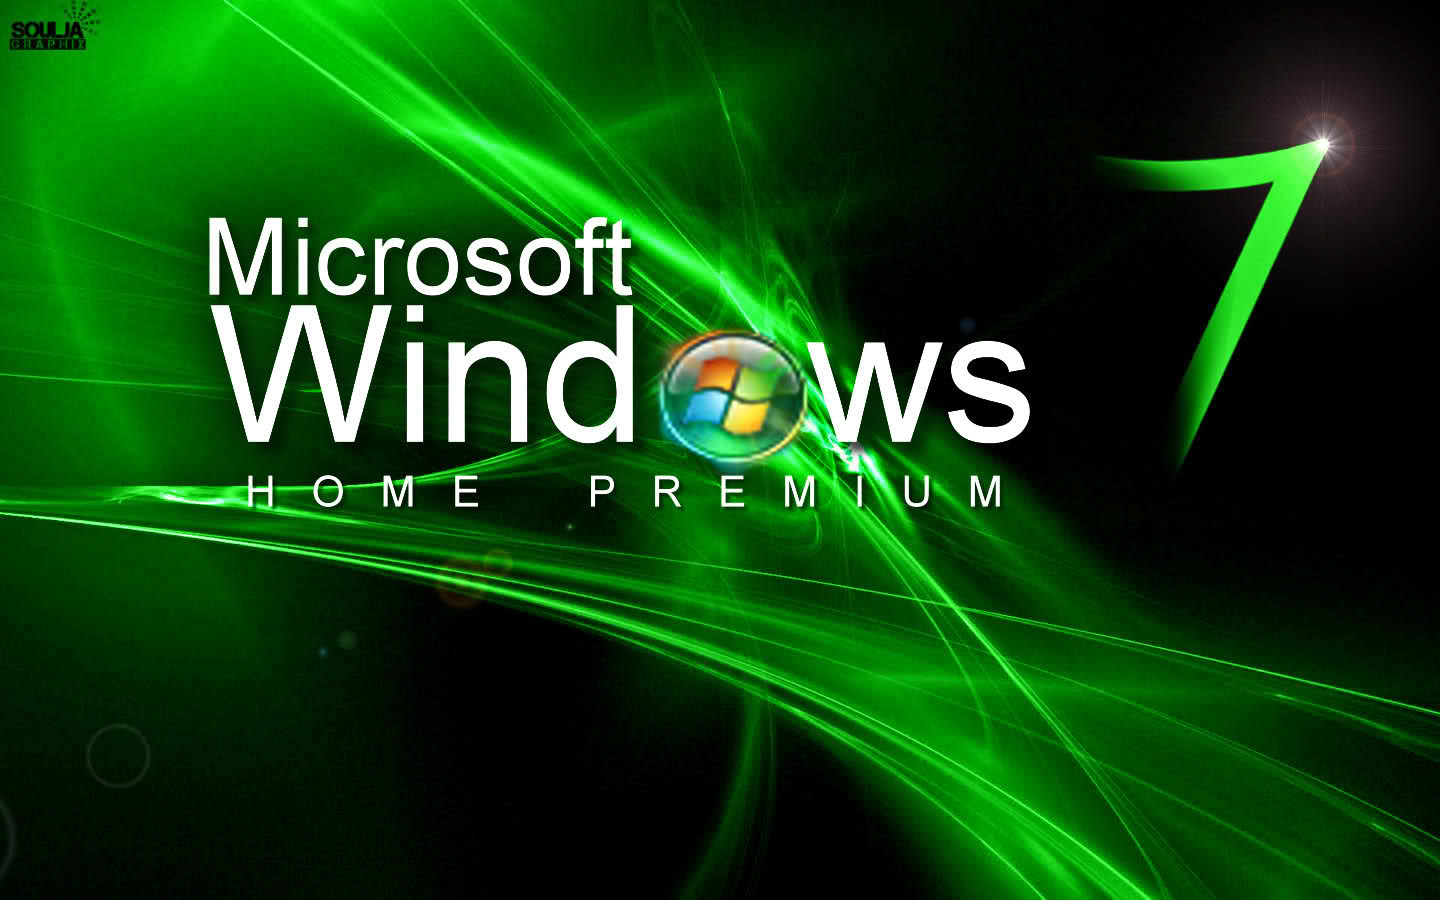 Custom Windows 7 Wallpapers - Page 60 - Windows 7 Help Forums